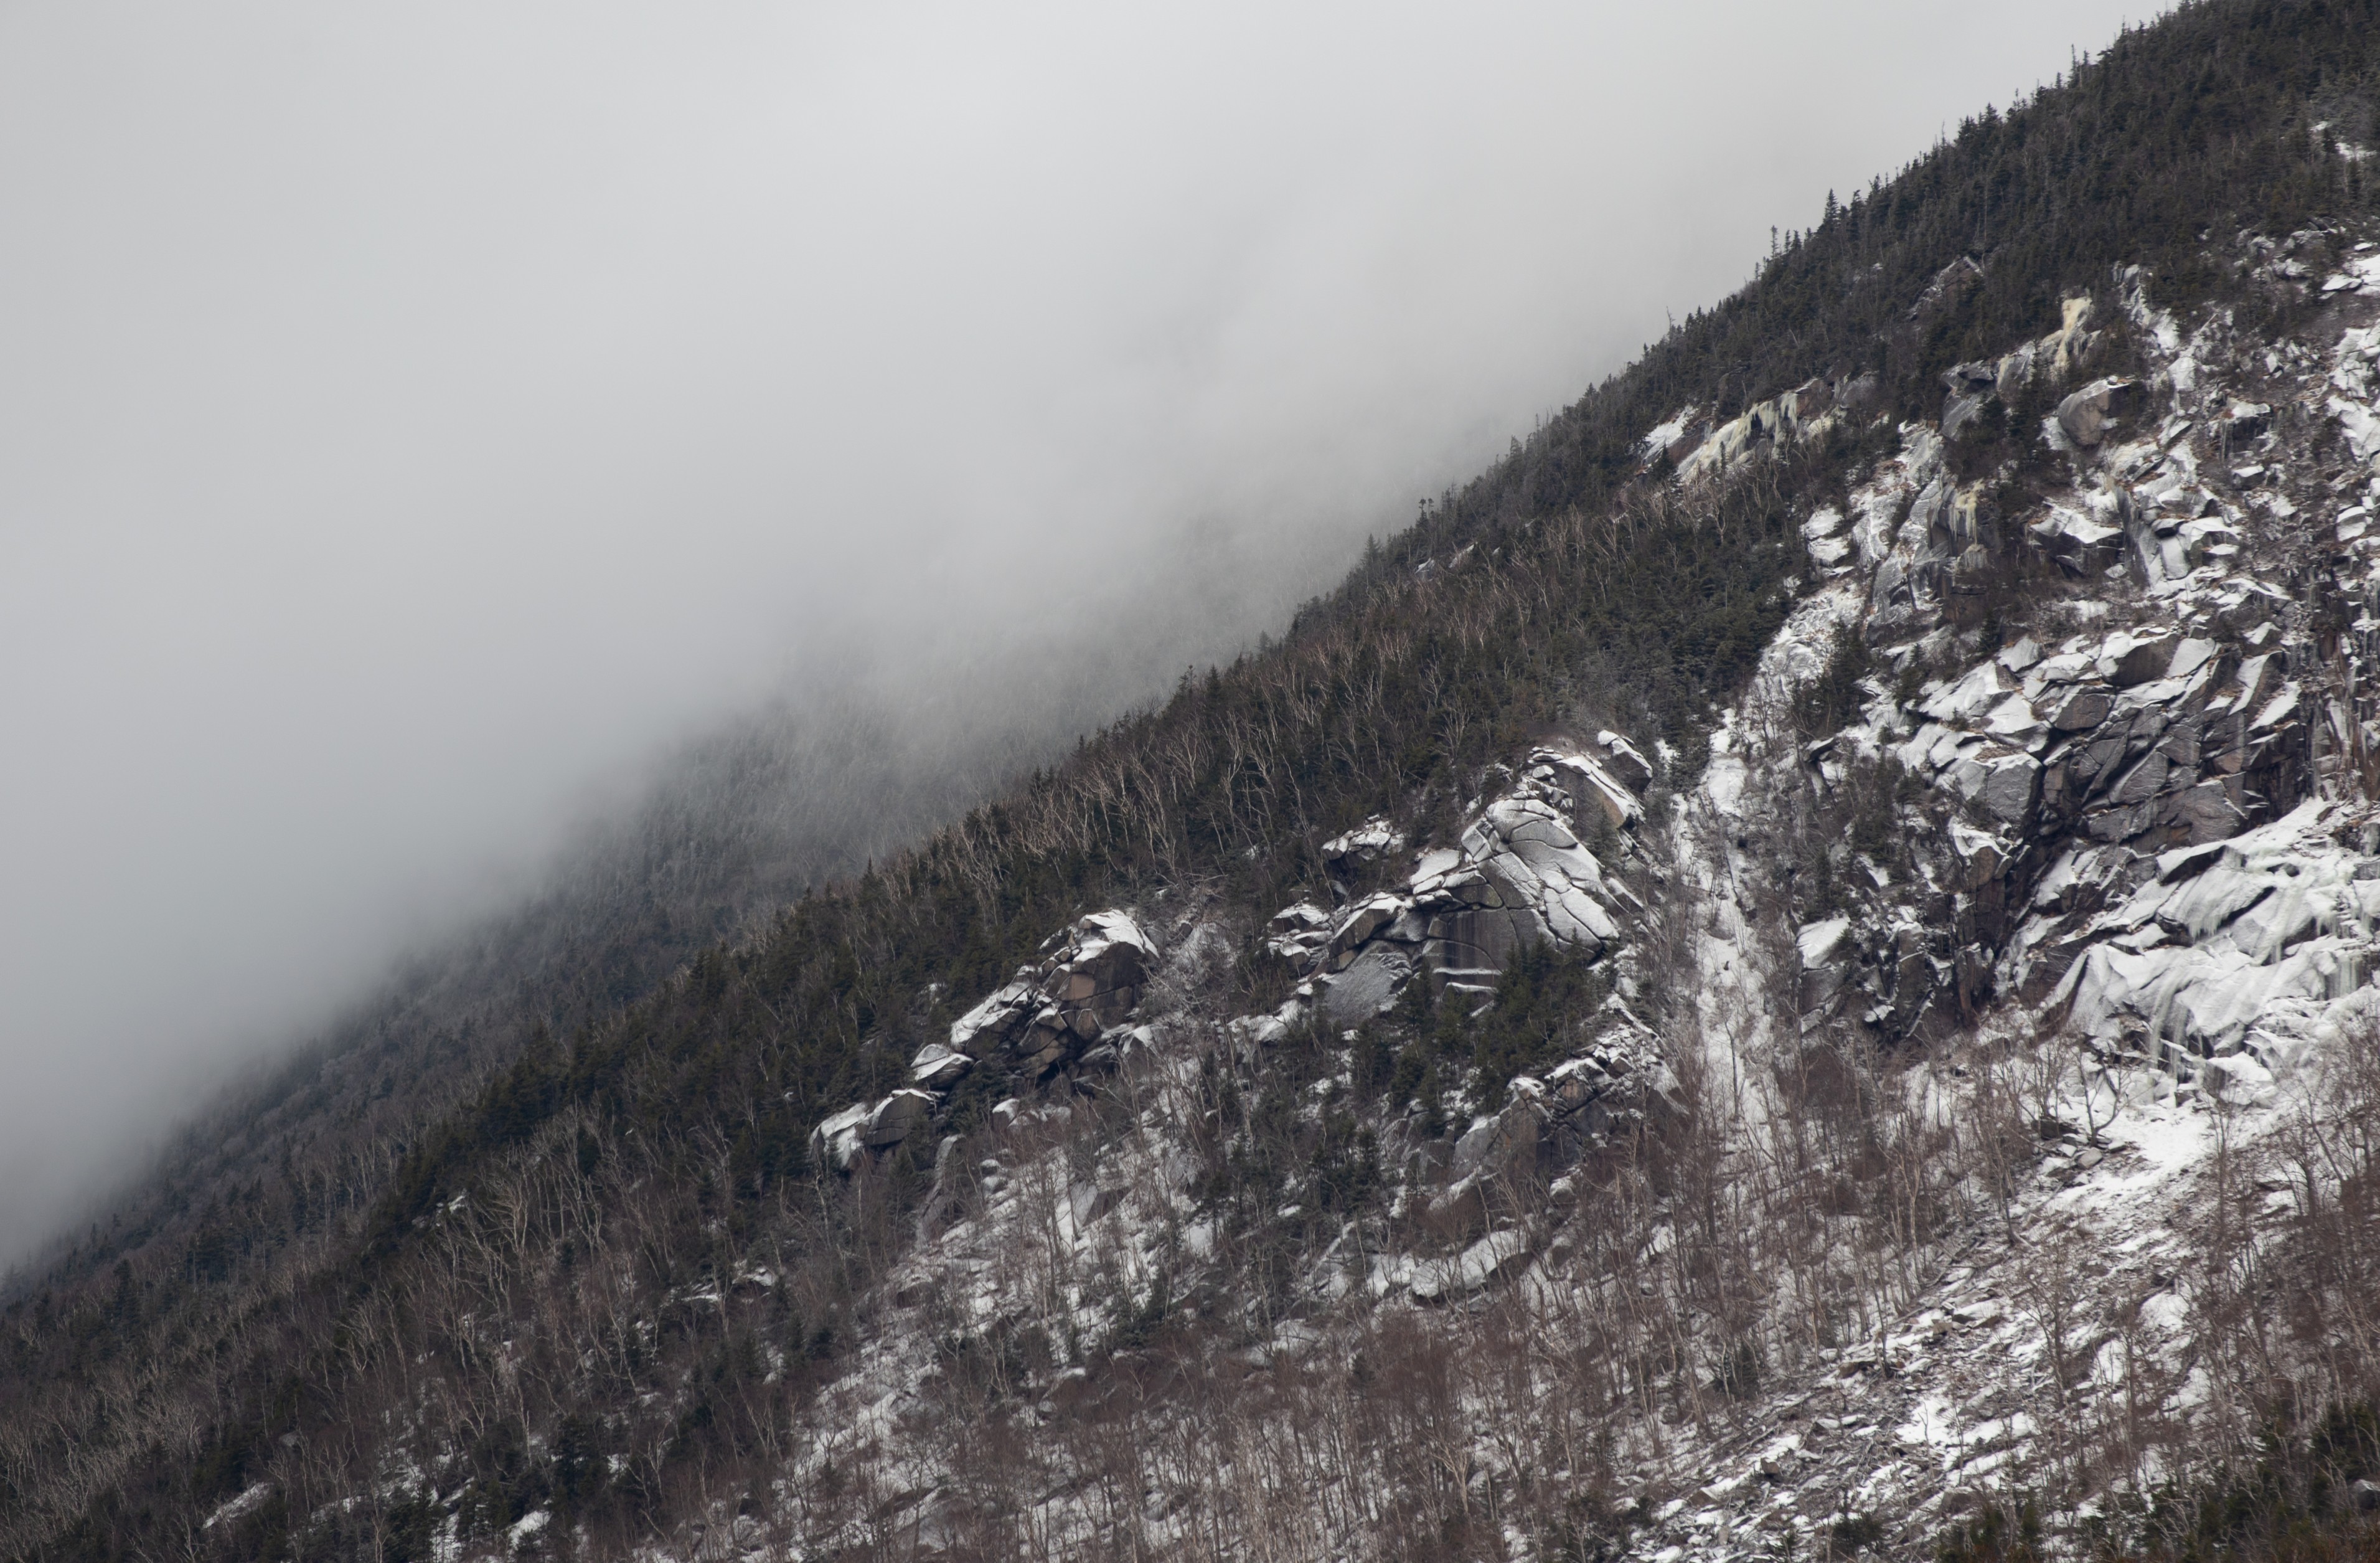 Download 3823x2510 Foggy Mountain, Cold, Rocks, Field, Plants, Mist